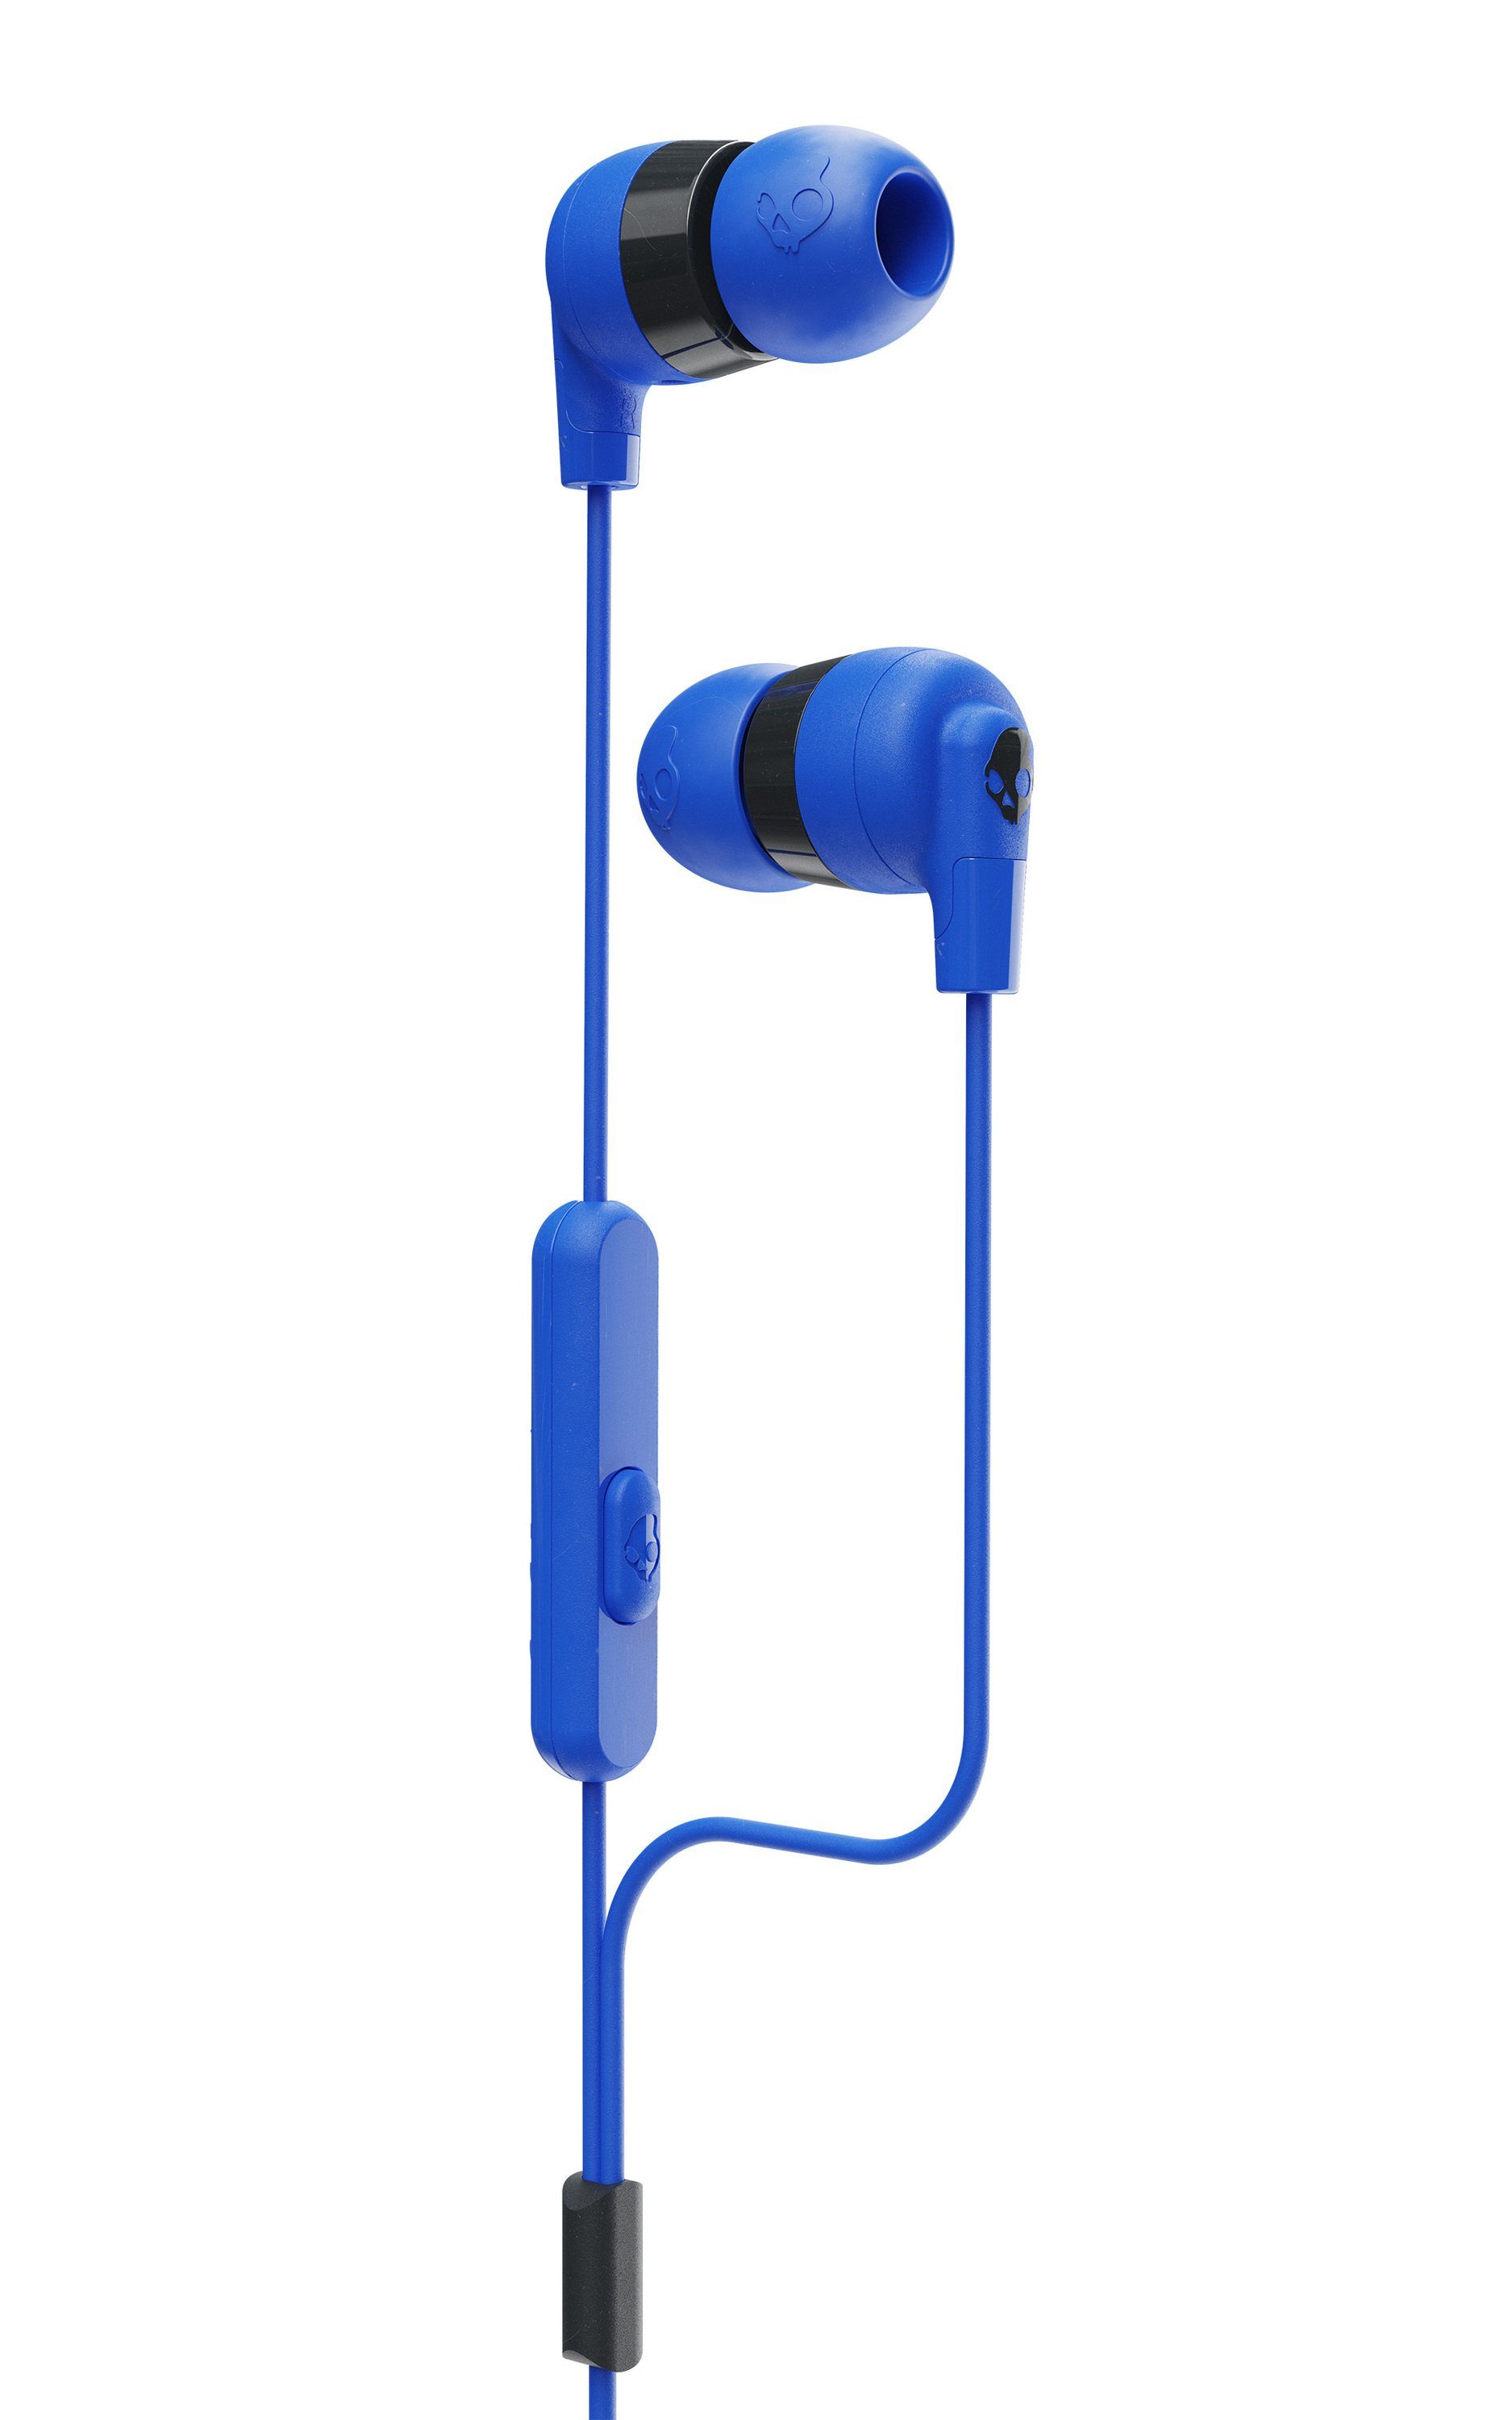 Klinkenstecker!, Headset 1 Headset IN-EAR m!, blau vergoldeter Skullcandy!, Tragekomfort!, In-Ear-Kopfhörer 1,30 Keine, wireless Kabellänge: Wireless) W/MIC von Skullcandy 3,5 Mikrofon!, (IN-EAR Integriertes Optimaler INKD+ mm